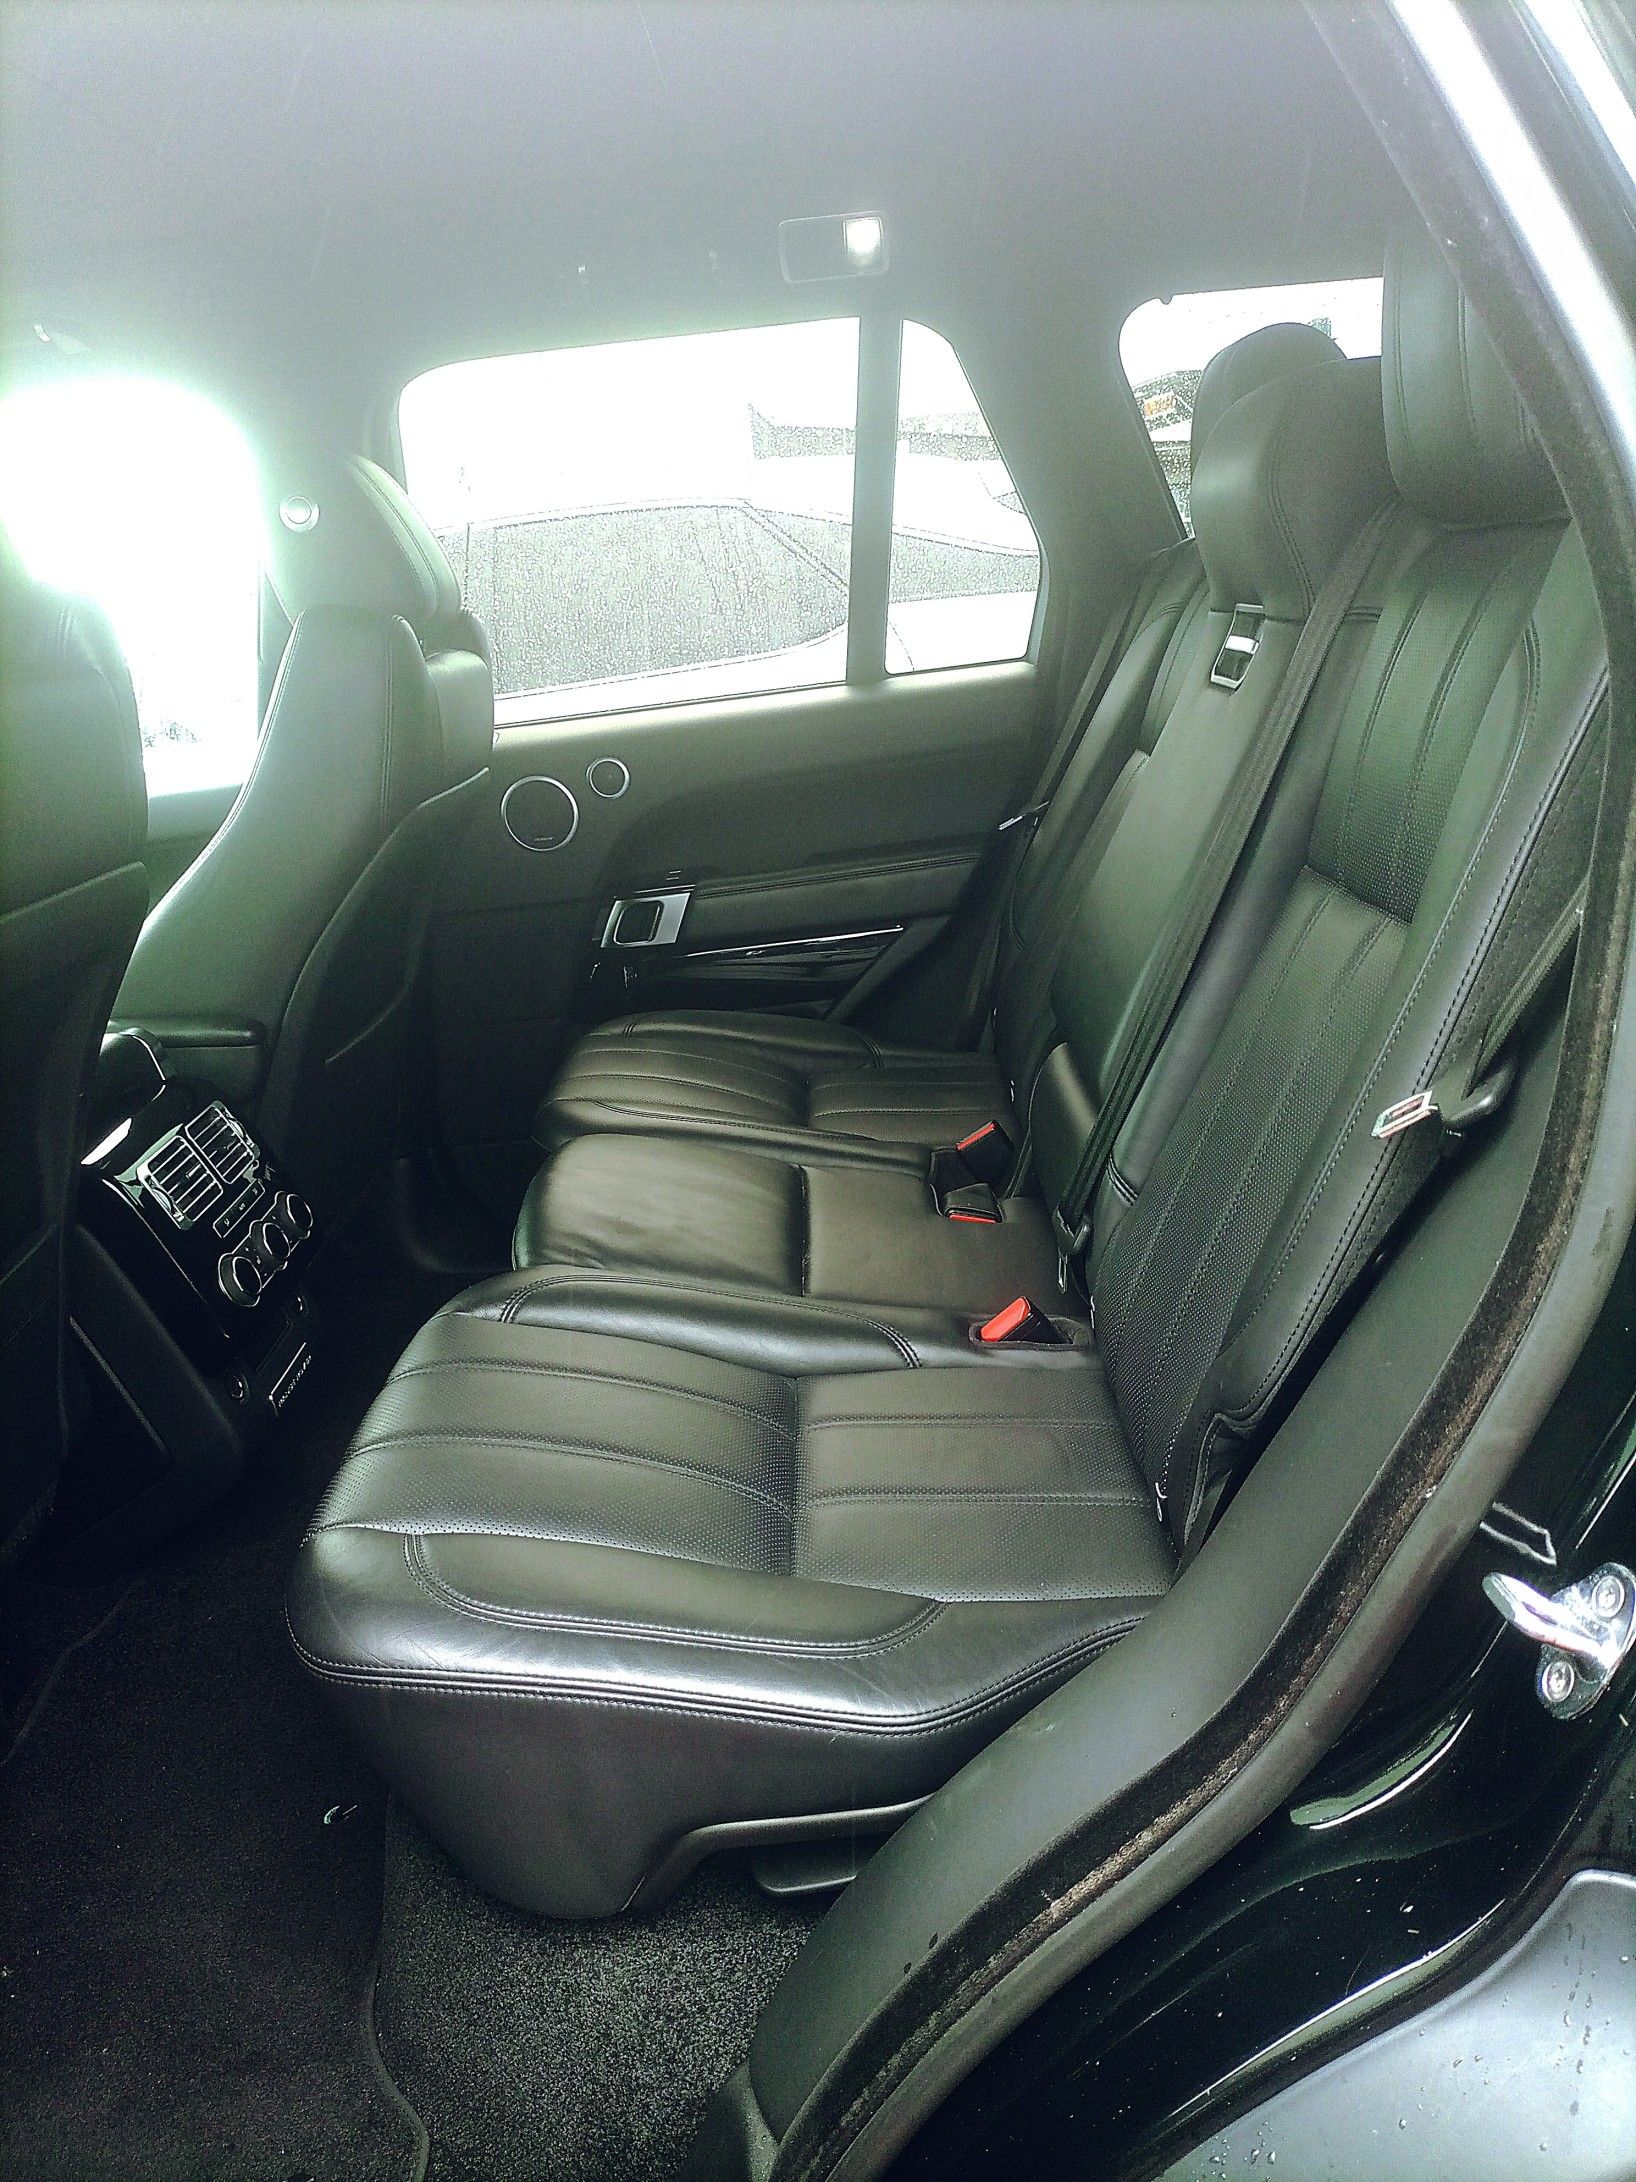 Range Rover Supercharged 2014, Ikate, Lekki, Lagos, Vehicles